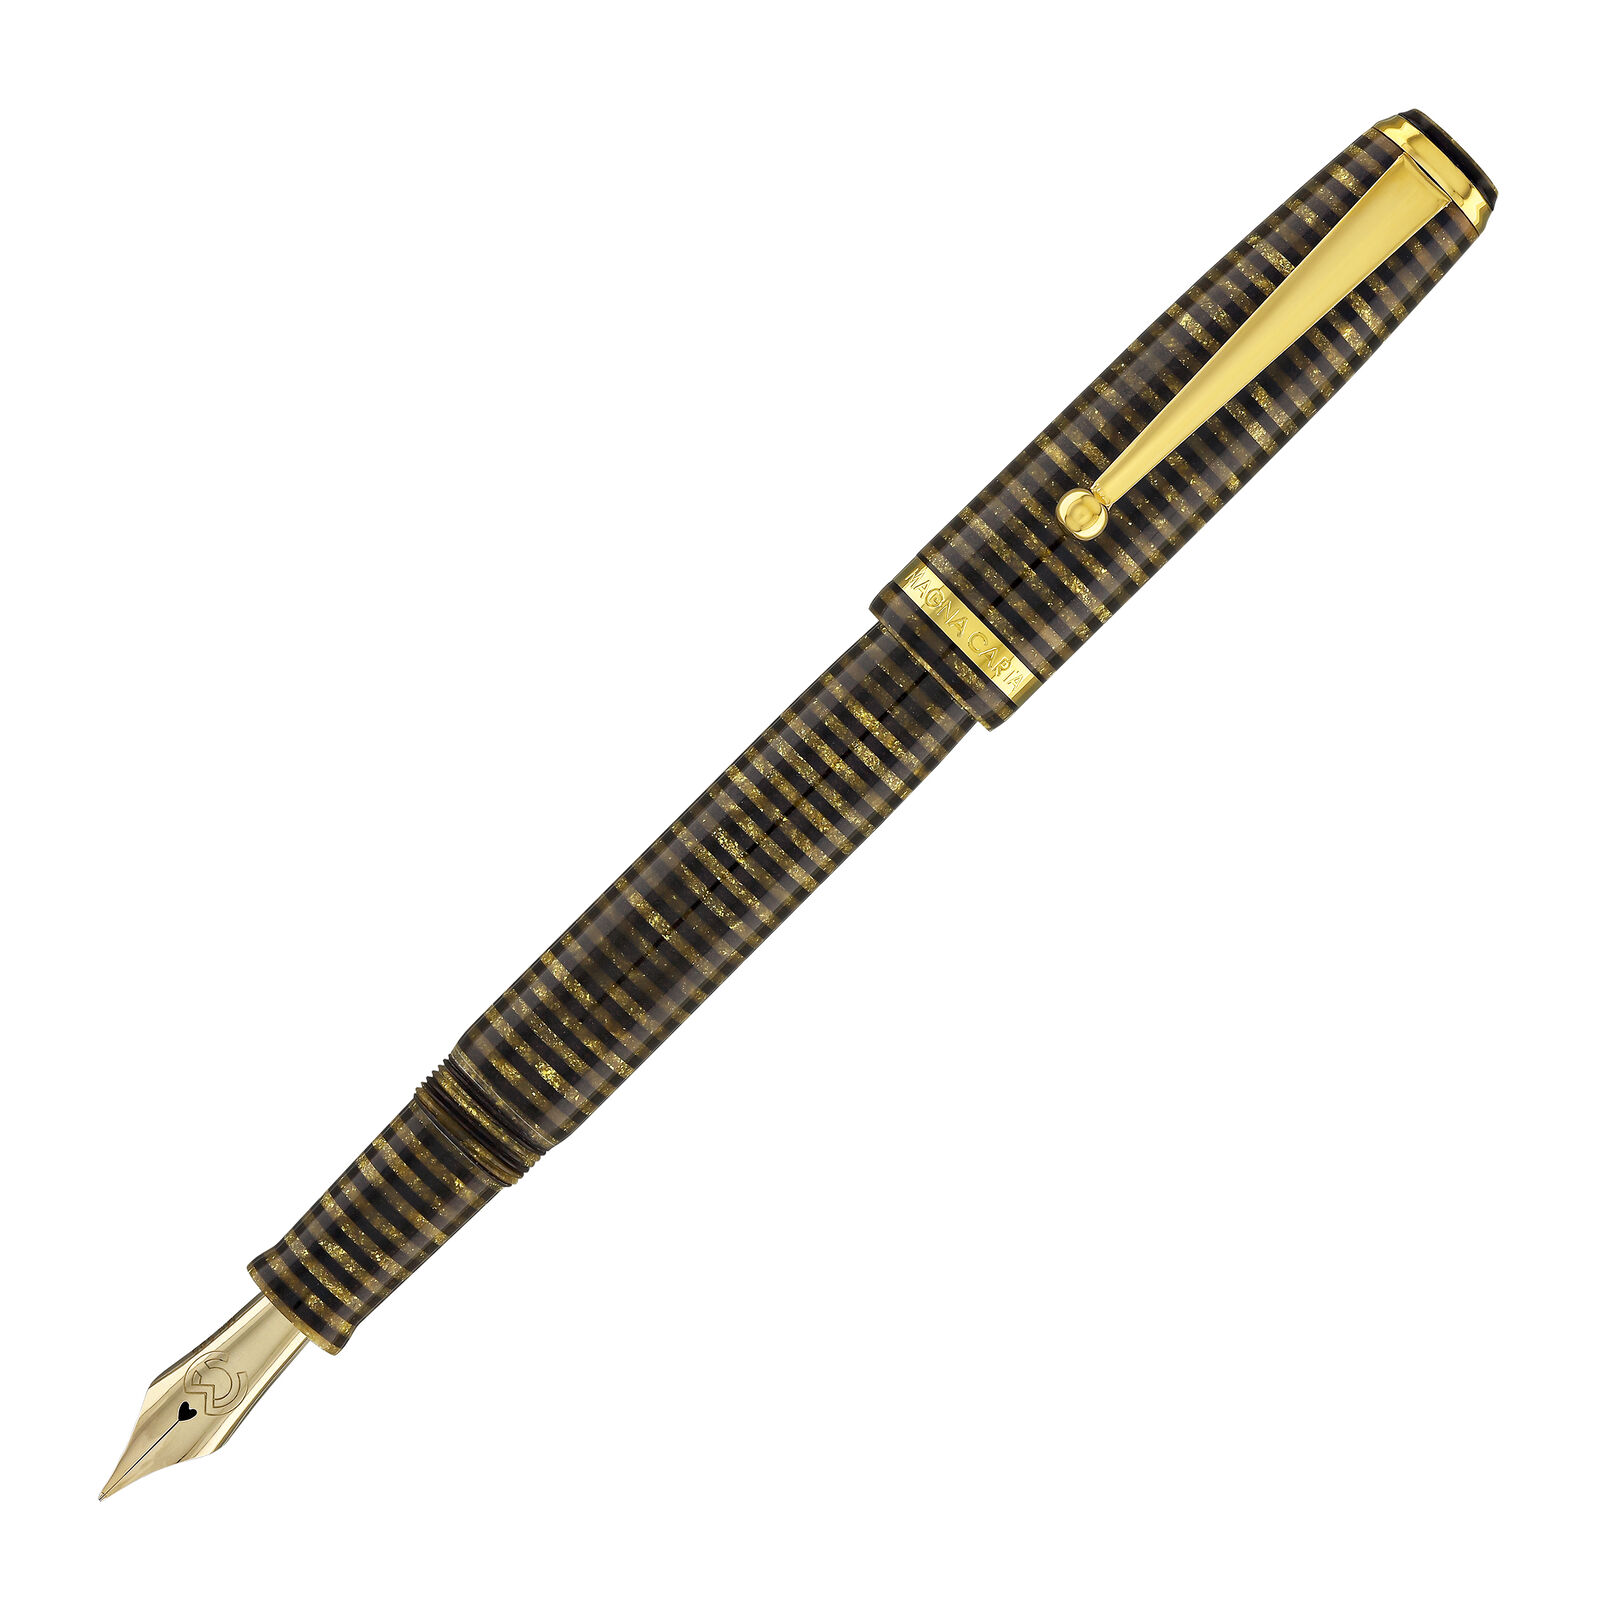 Magna Carta MAG 650 Fountain Pen in Amber - 14kt Gold Flex Nib - NEW in Box